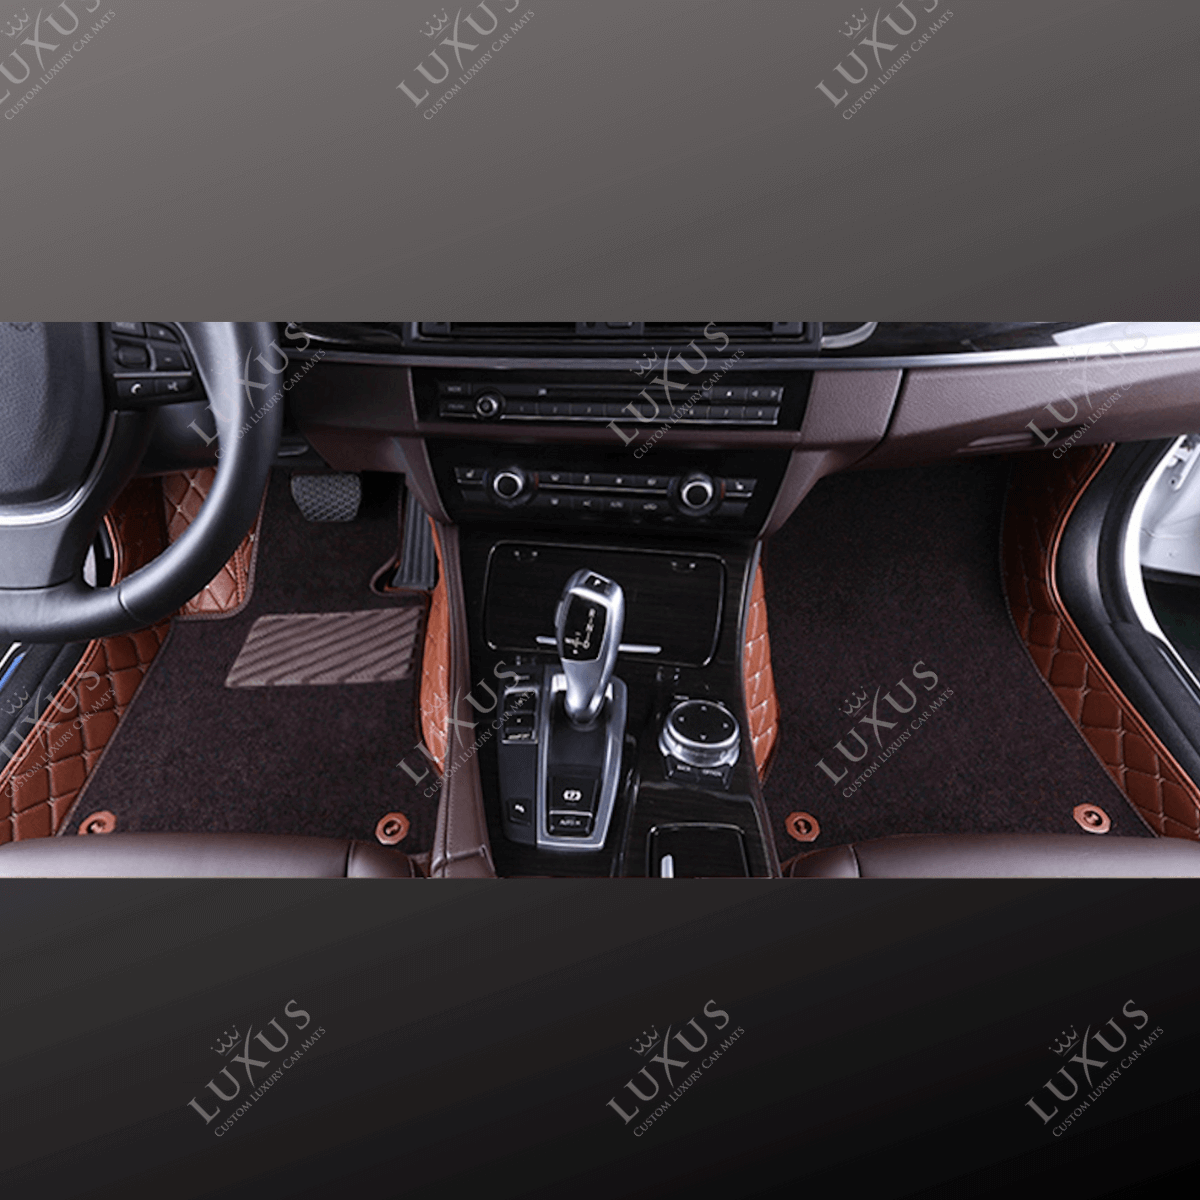 Caramel Brown Diamond Base & Brown Top Carpet Double Layer Luxury Car Mats Set